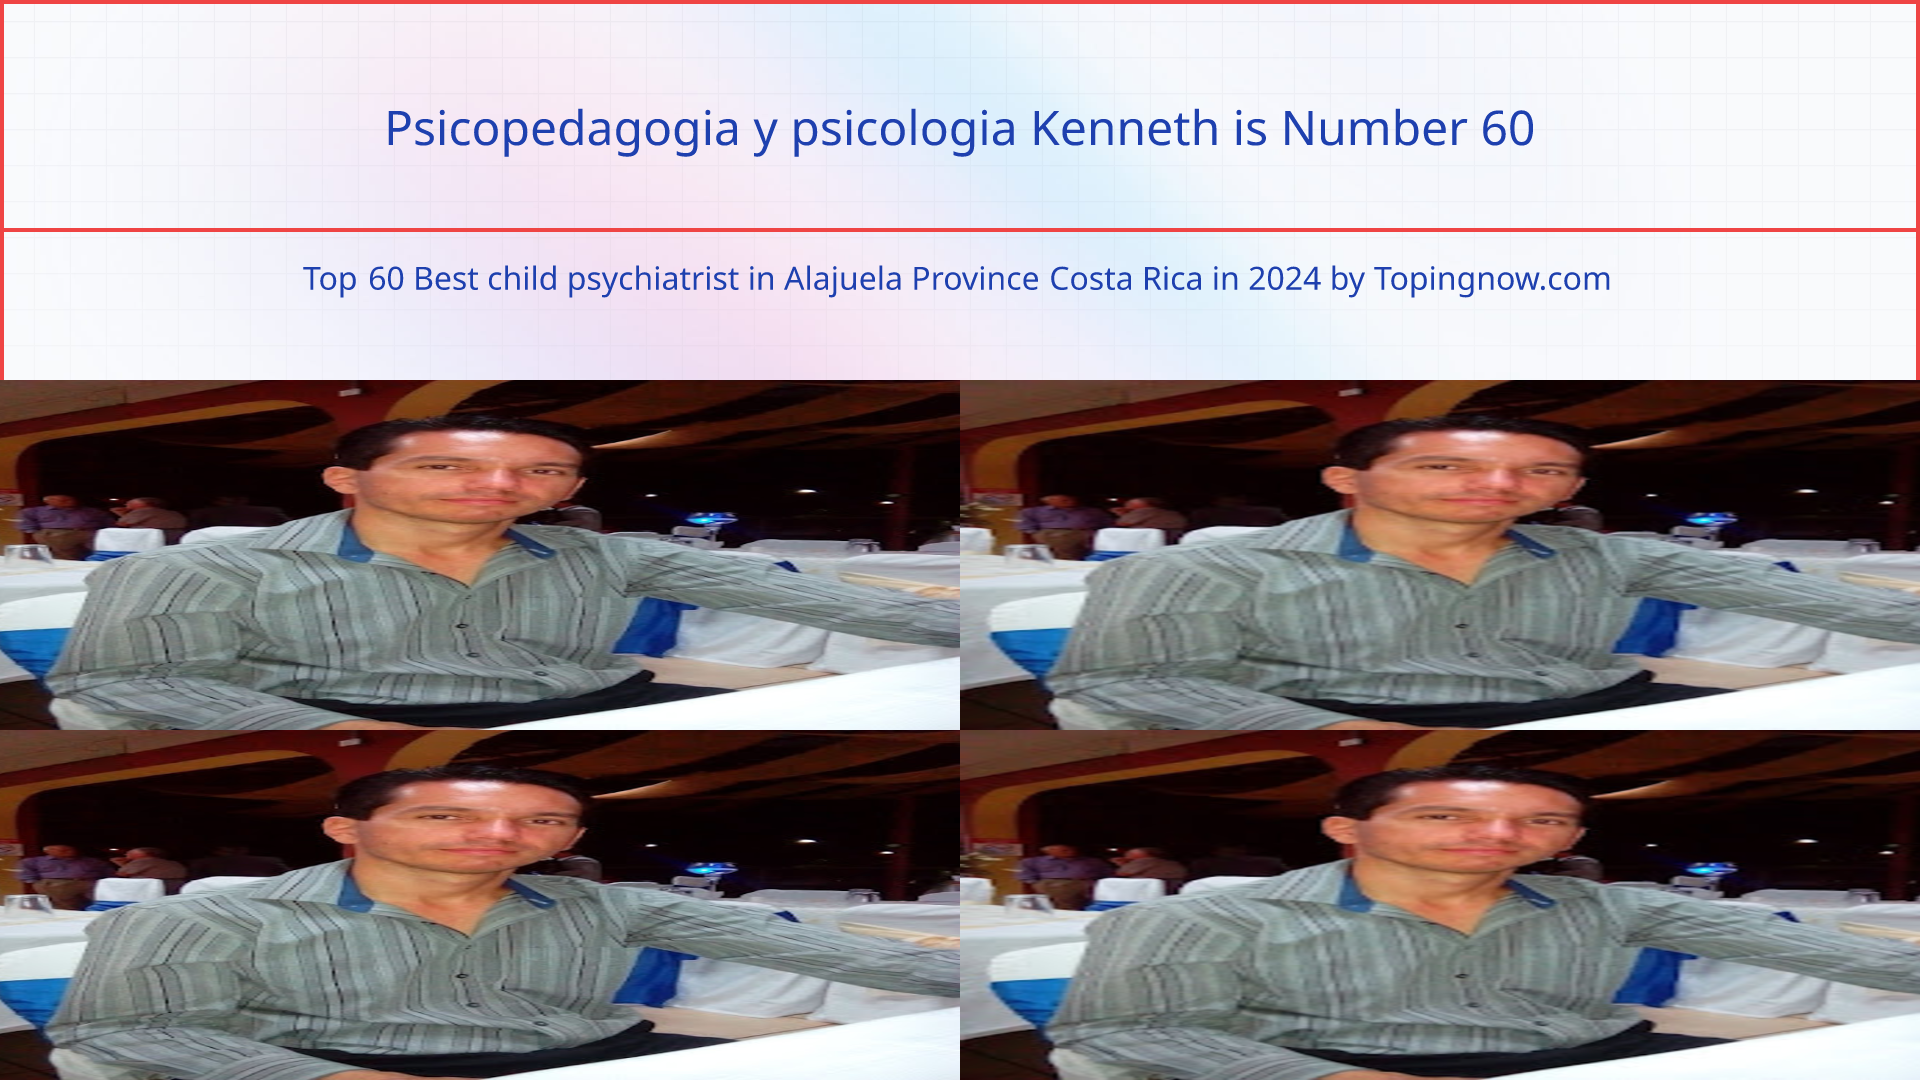 Psicopedagogia y psicologia Kenneth: Top 60 Best child psychiatrist in Alajuela Province Costa Rica in 2024